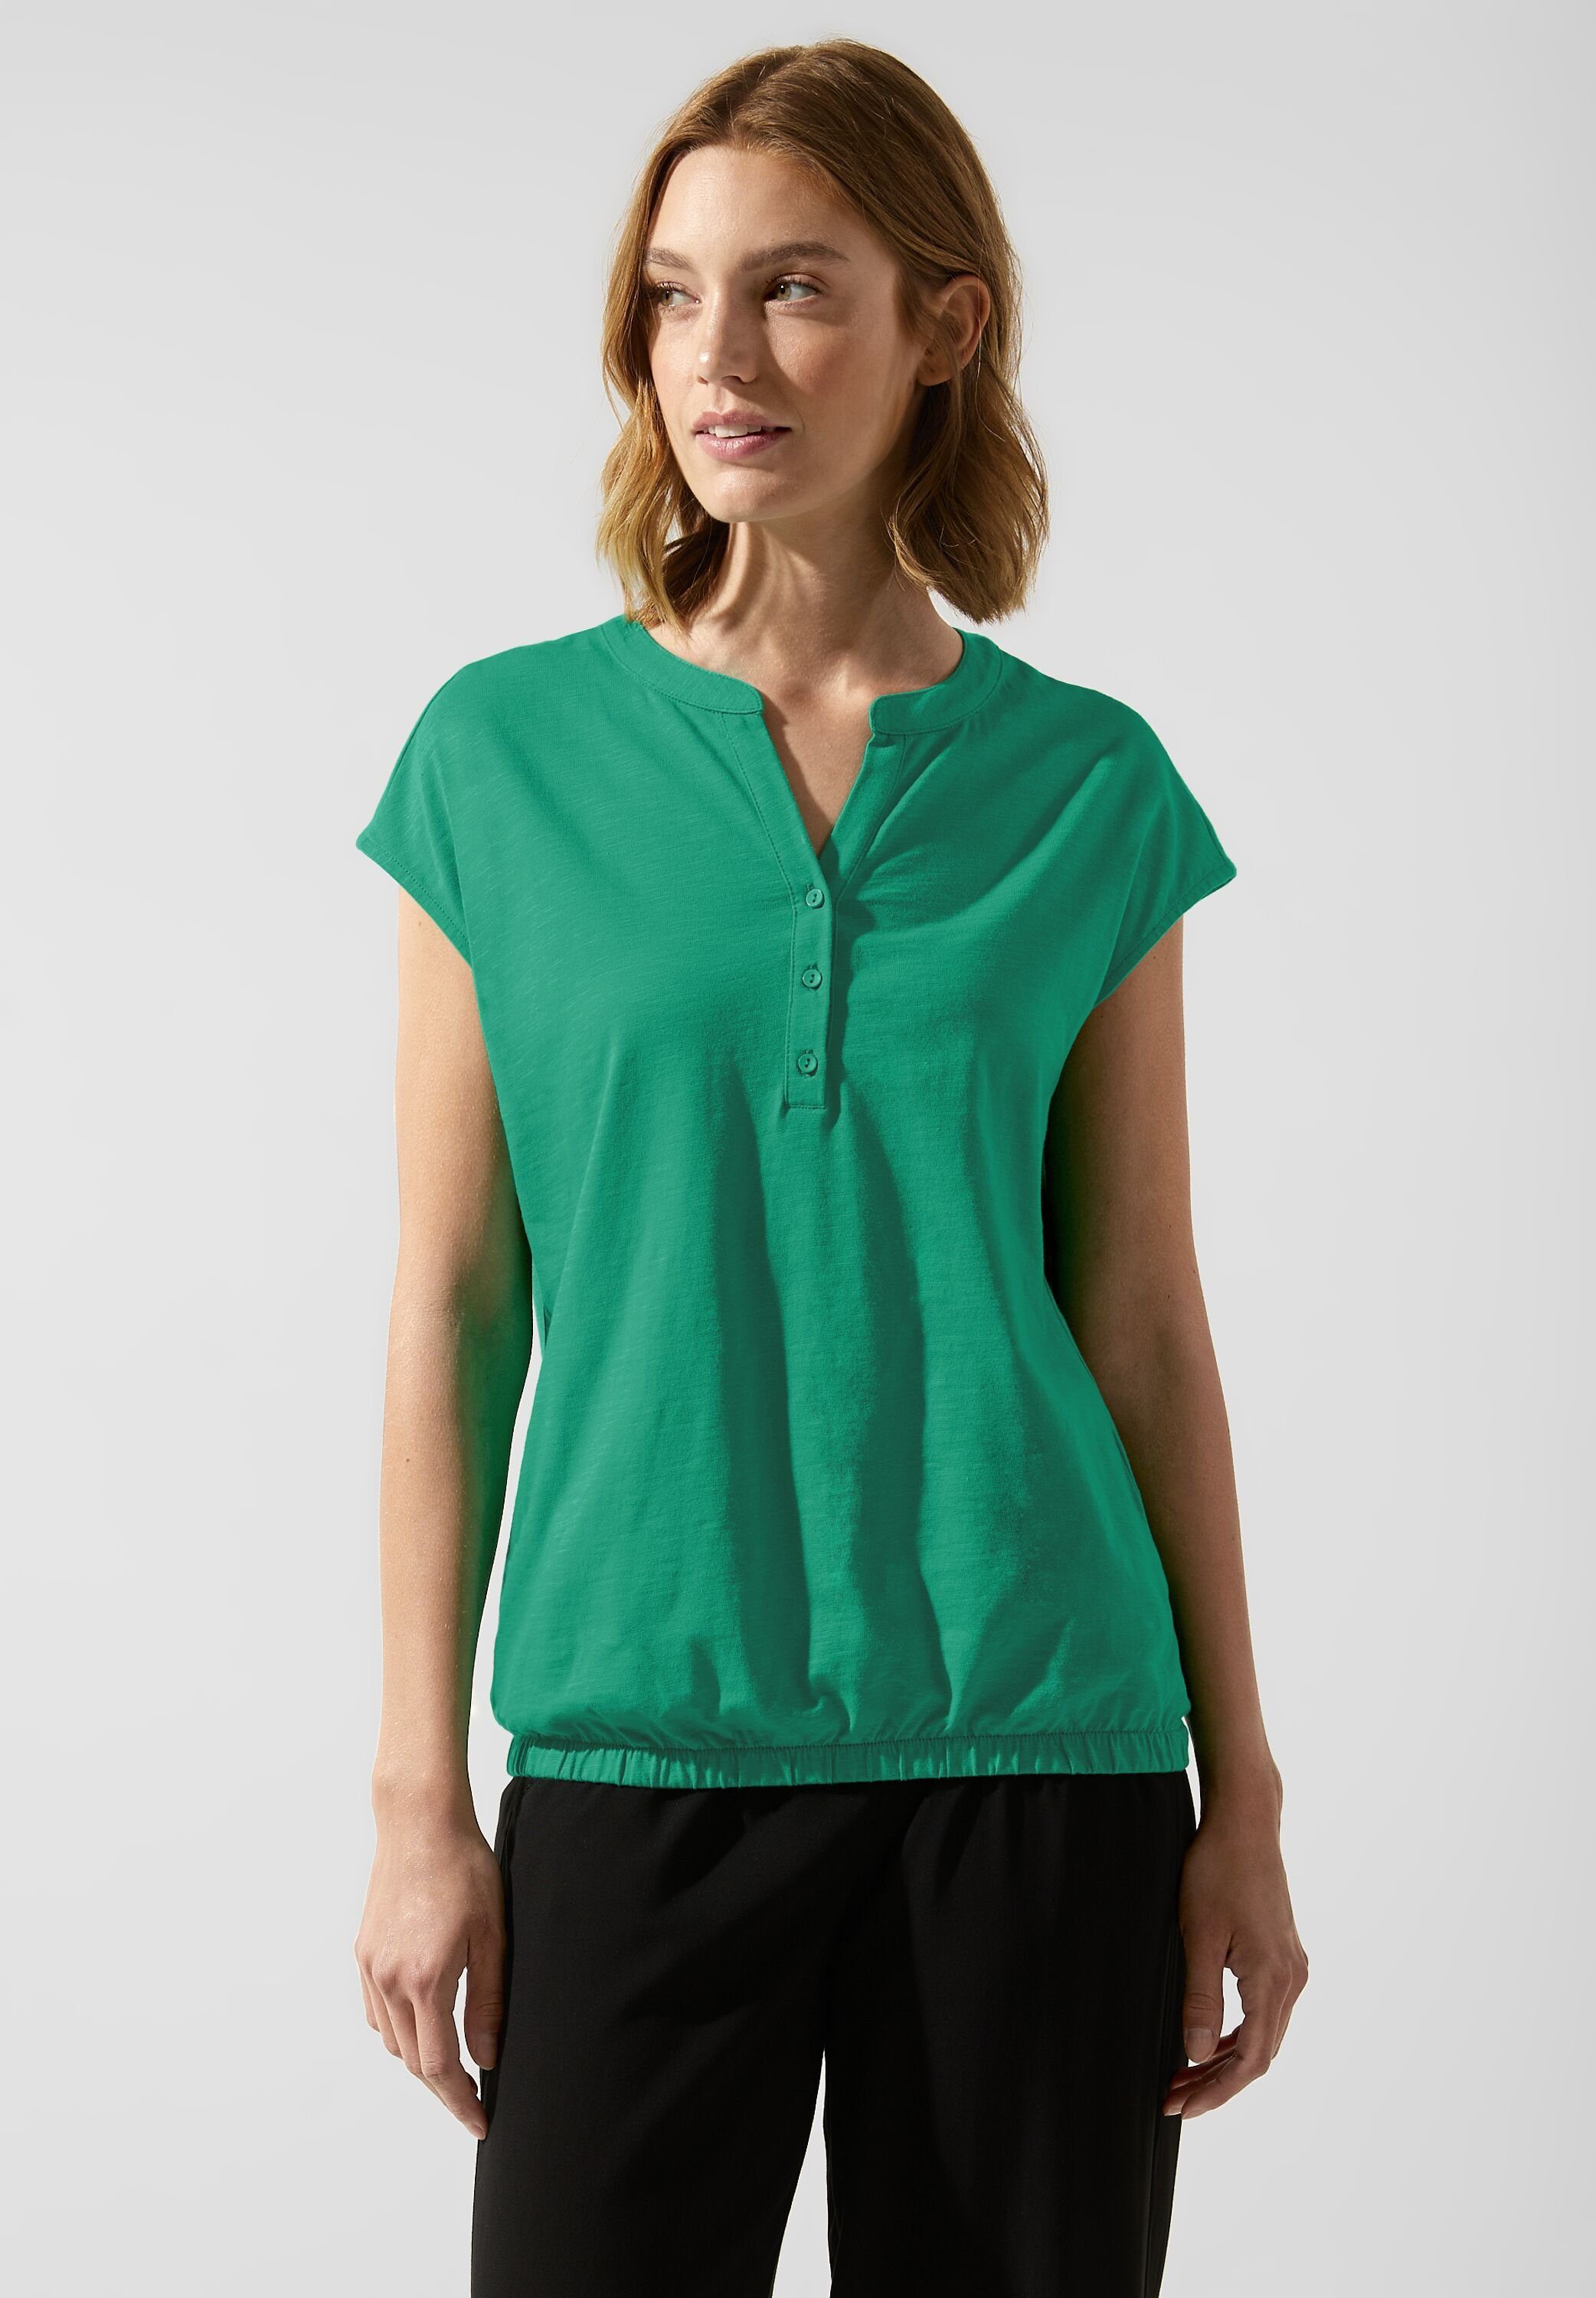 Unifarbe green cameo ONE T-Shirt in STREET dark